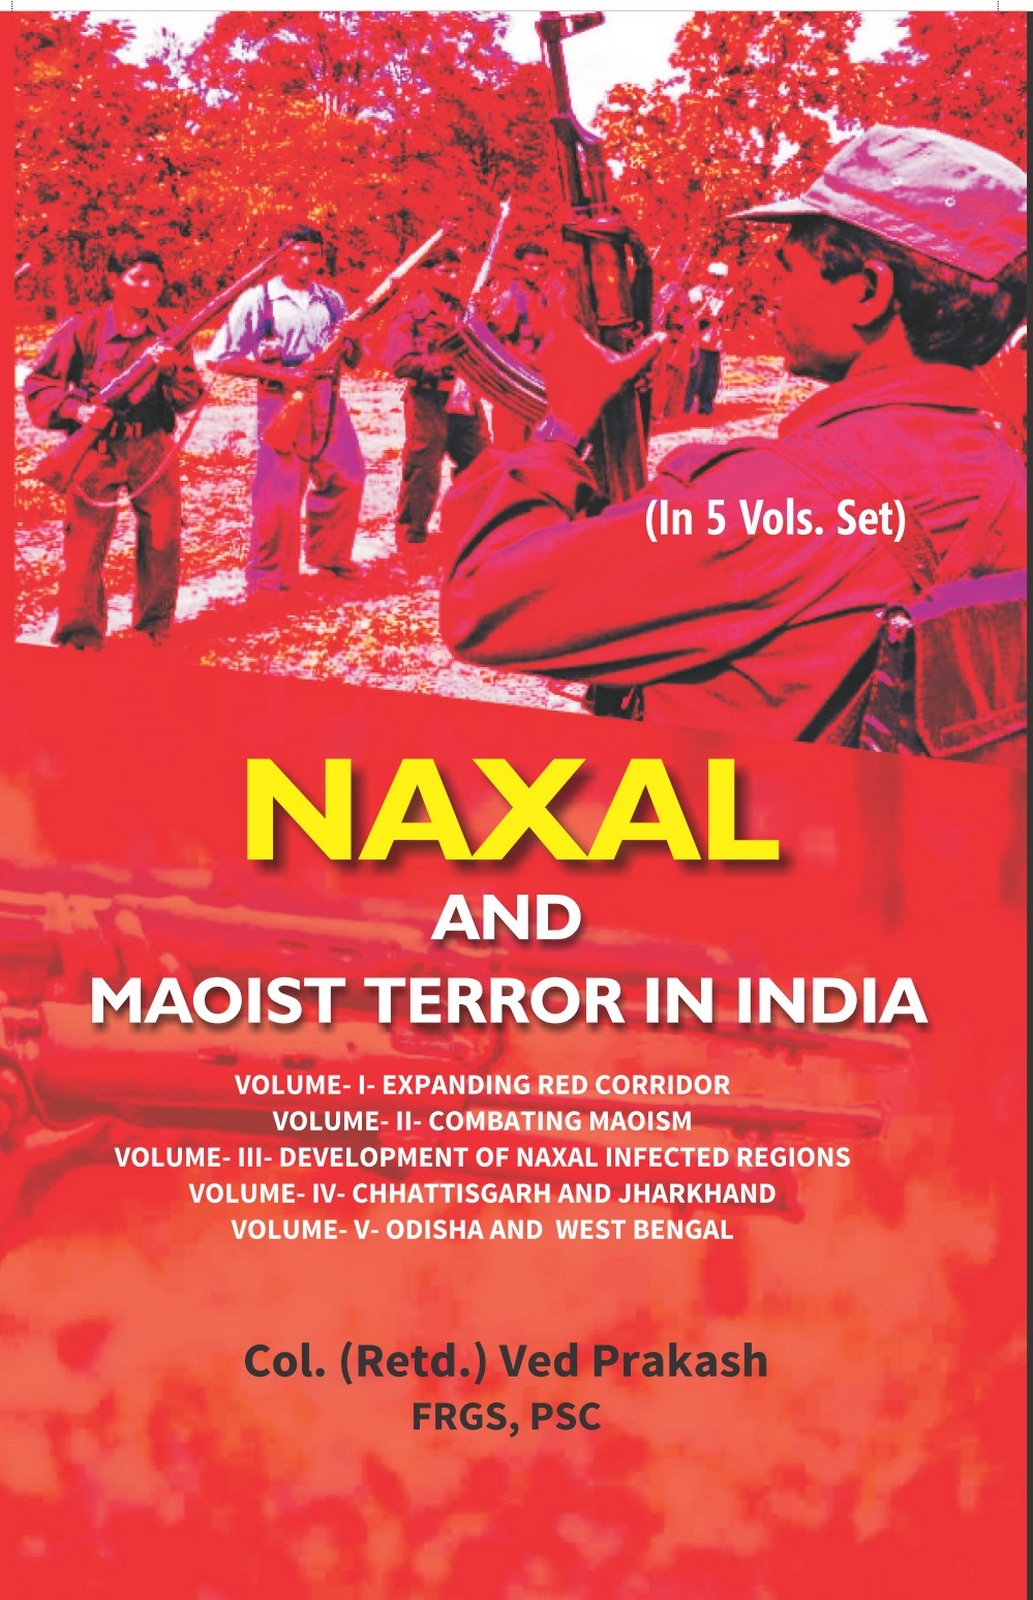 Naxal and Maoist Terror in India Volume-III (Development of Naxal infected Regions)